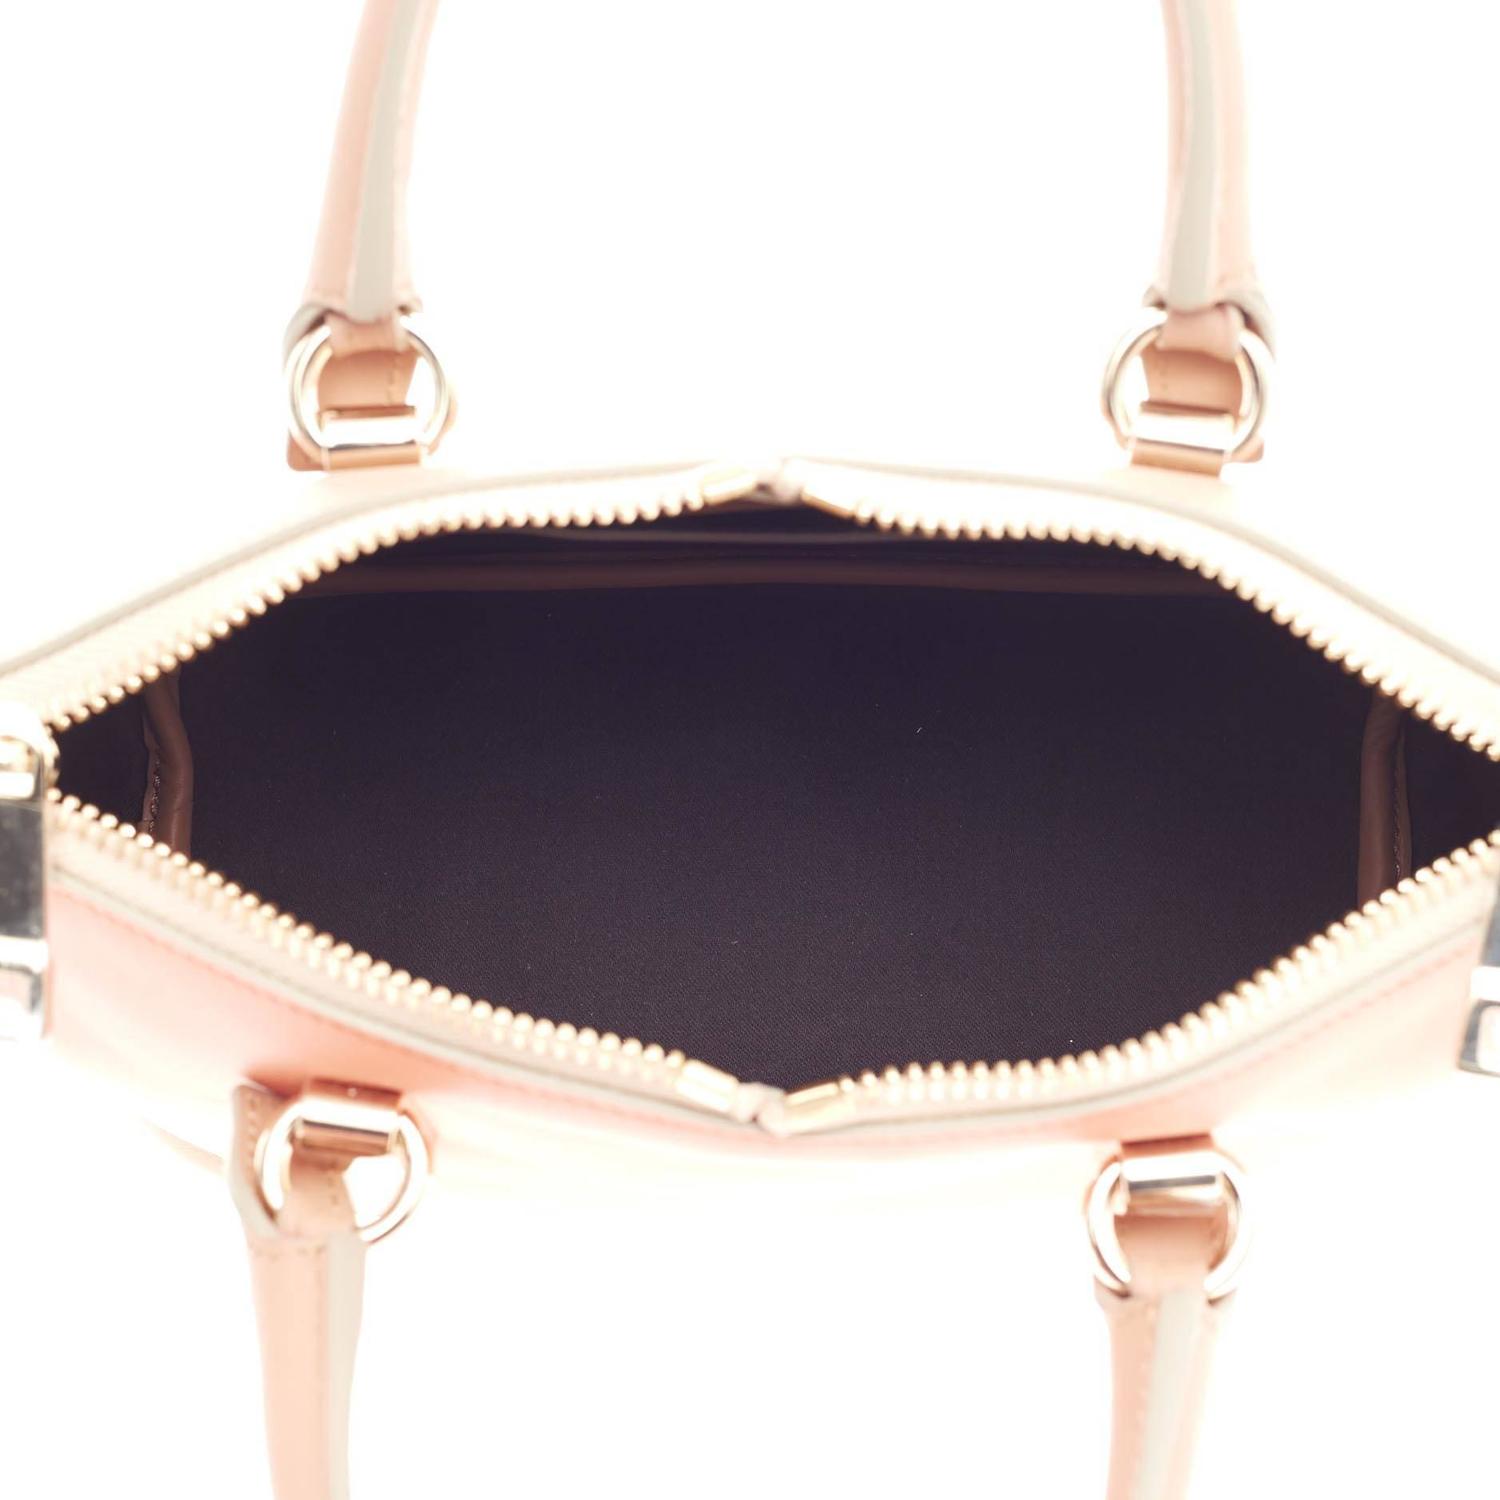 blue chloe handbag - Chloe Baylee Satchel Bicolor Leather Mini For Sale at 1stdibs